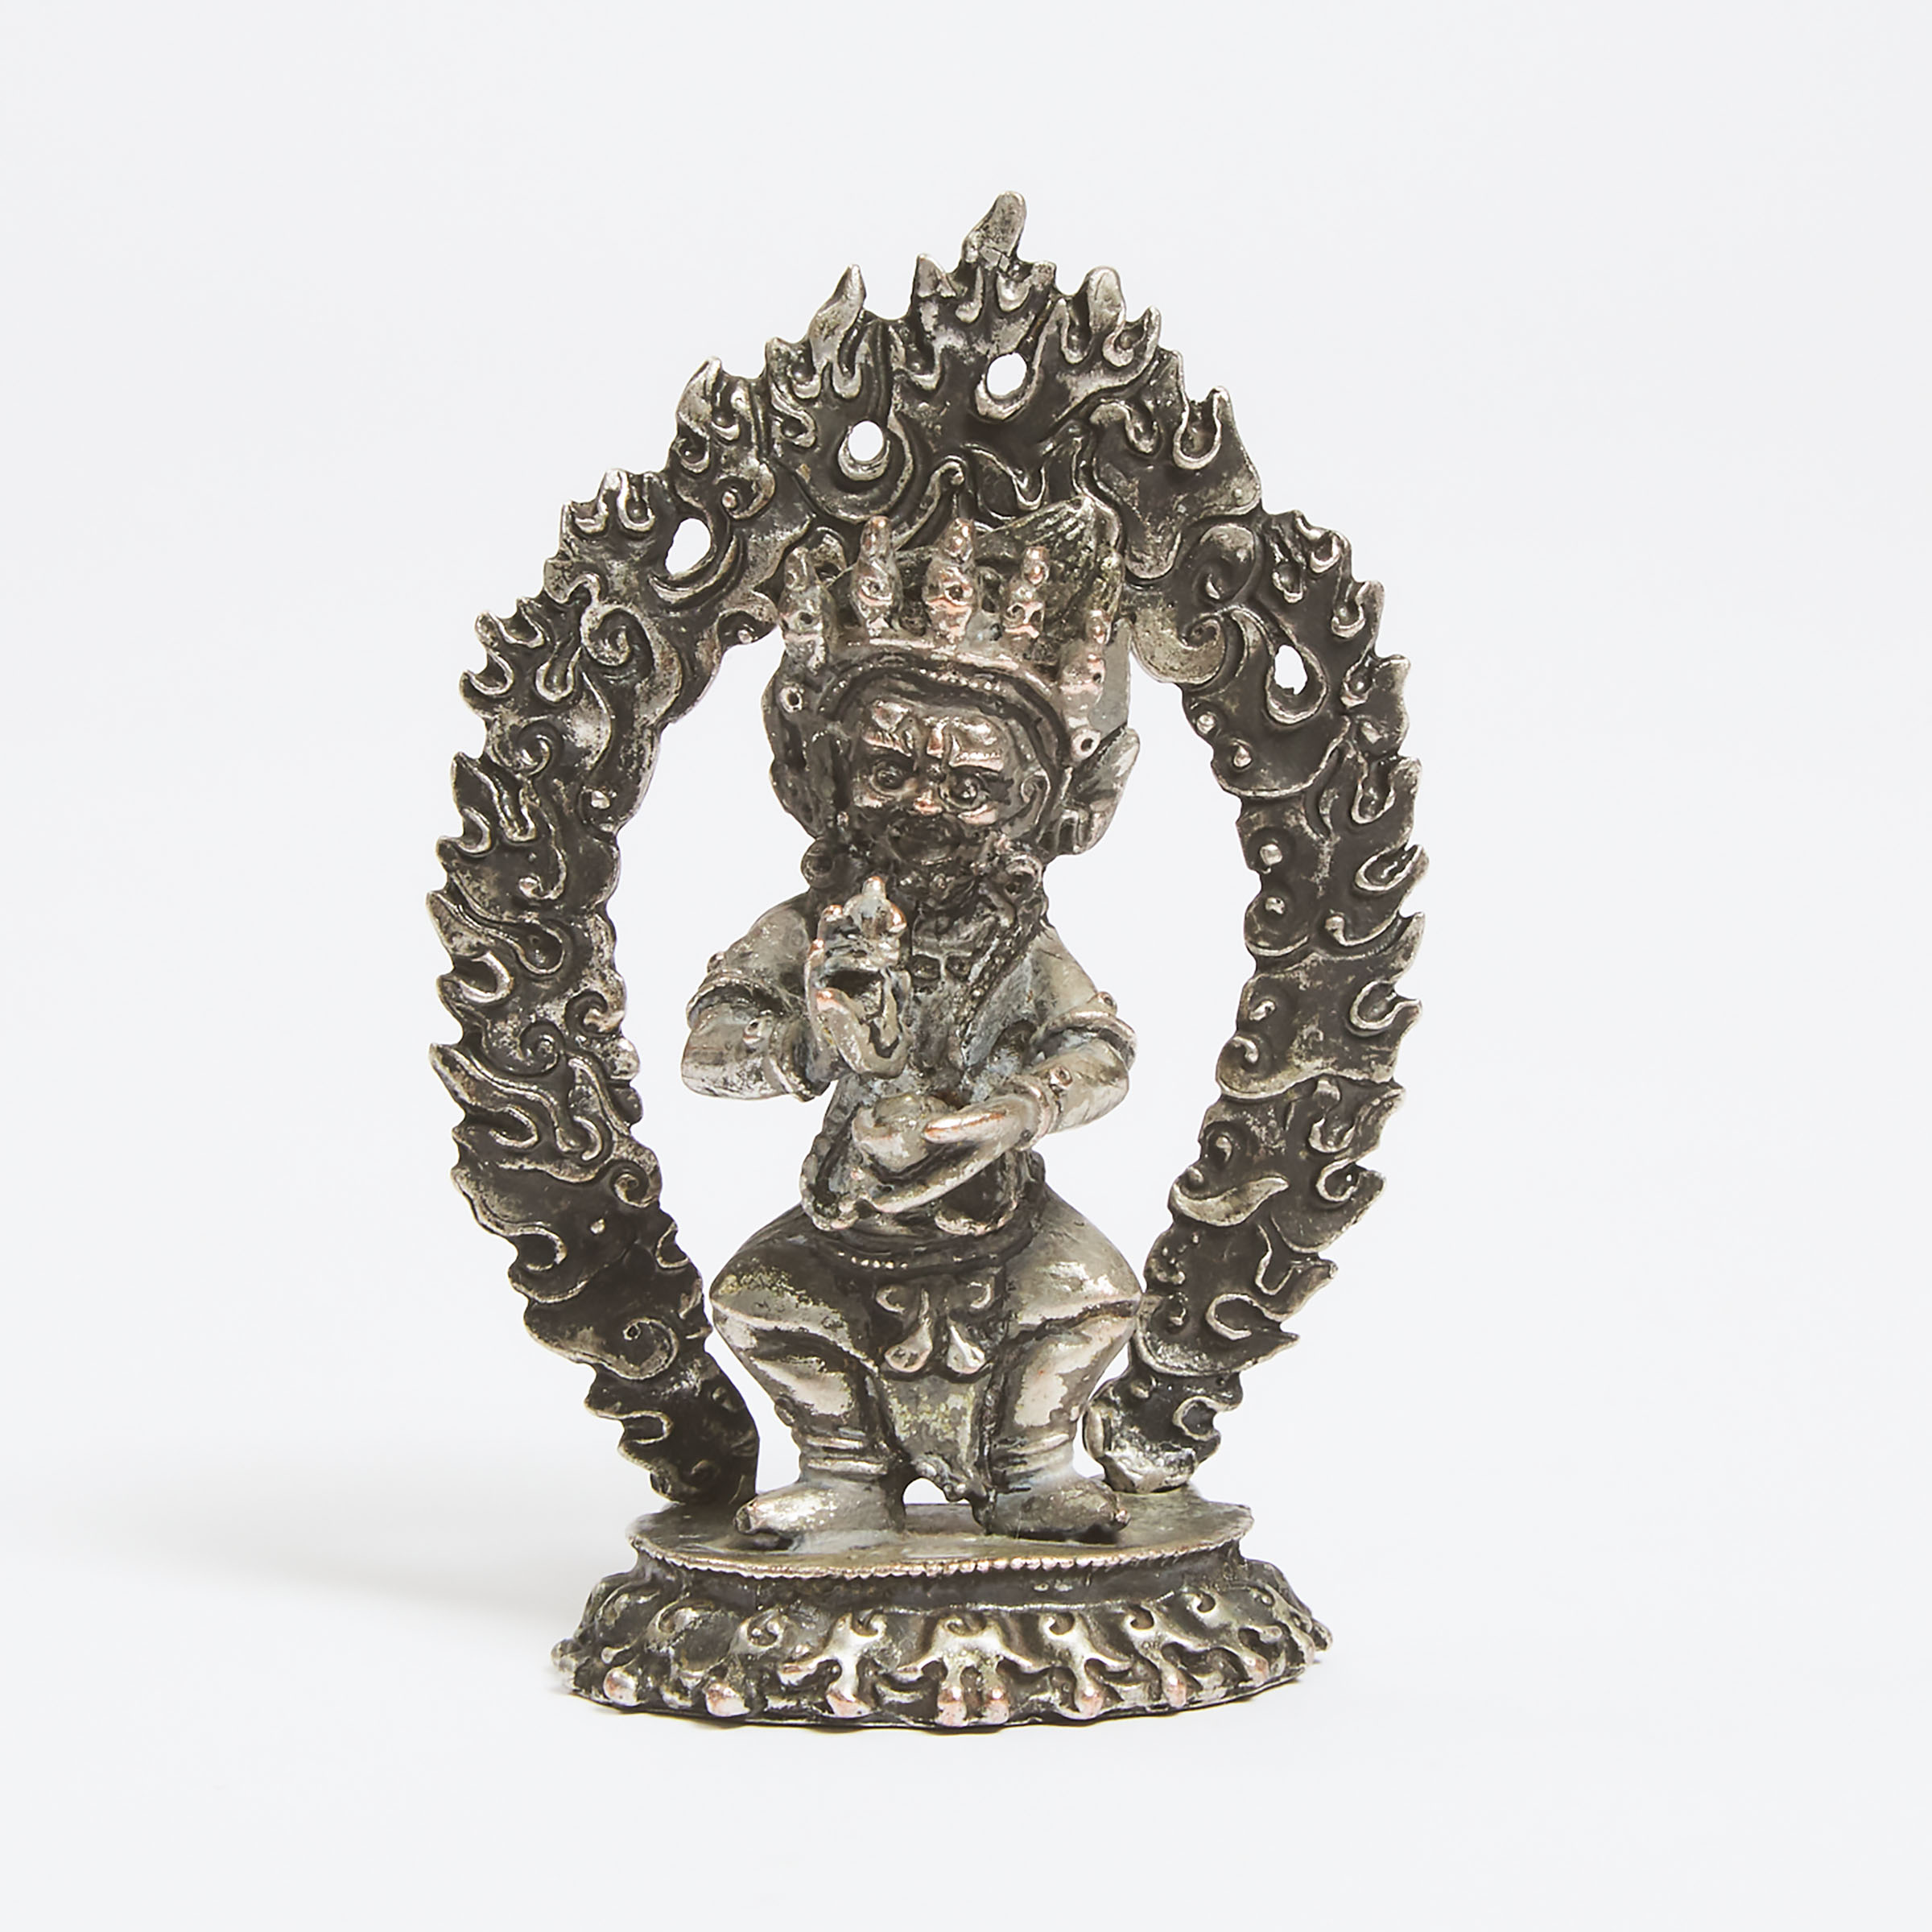 A Small Tibetan Silvered Bronze Figure of Mahakala, 19th Century or Earlier